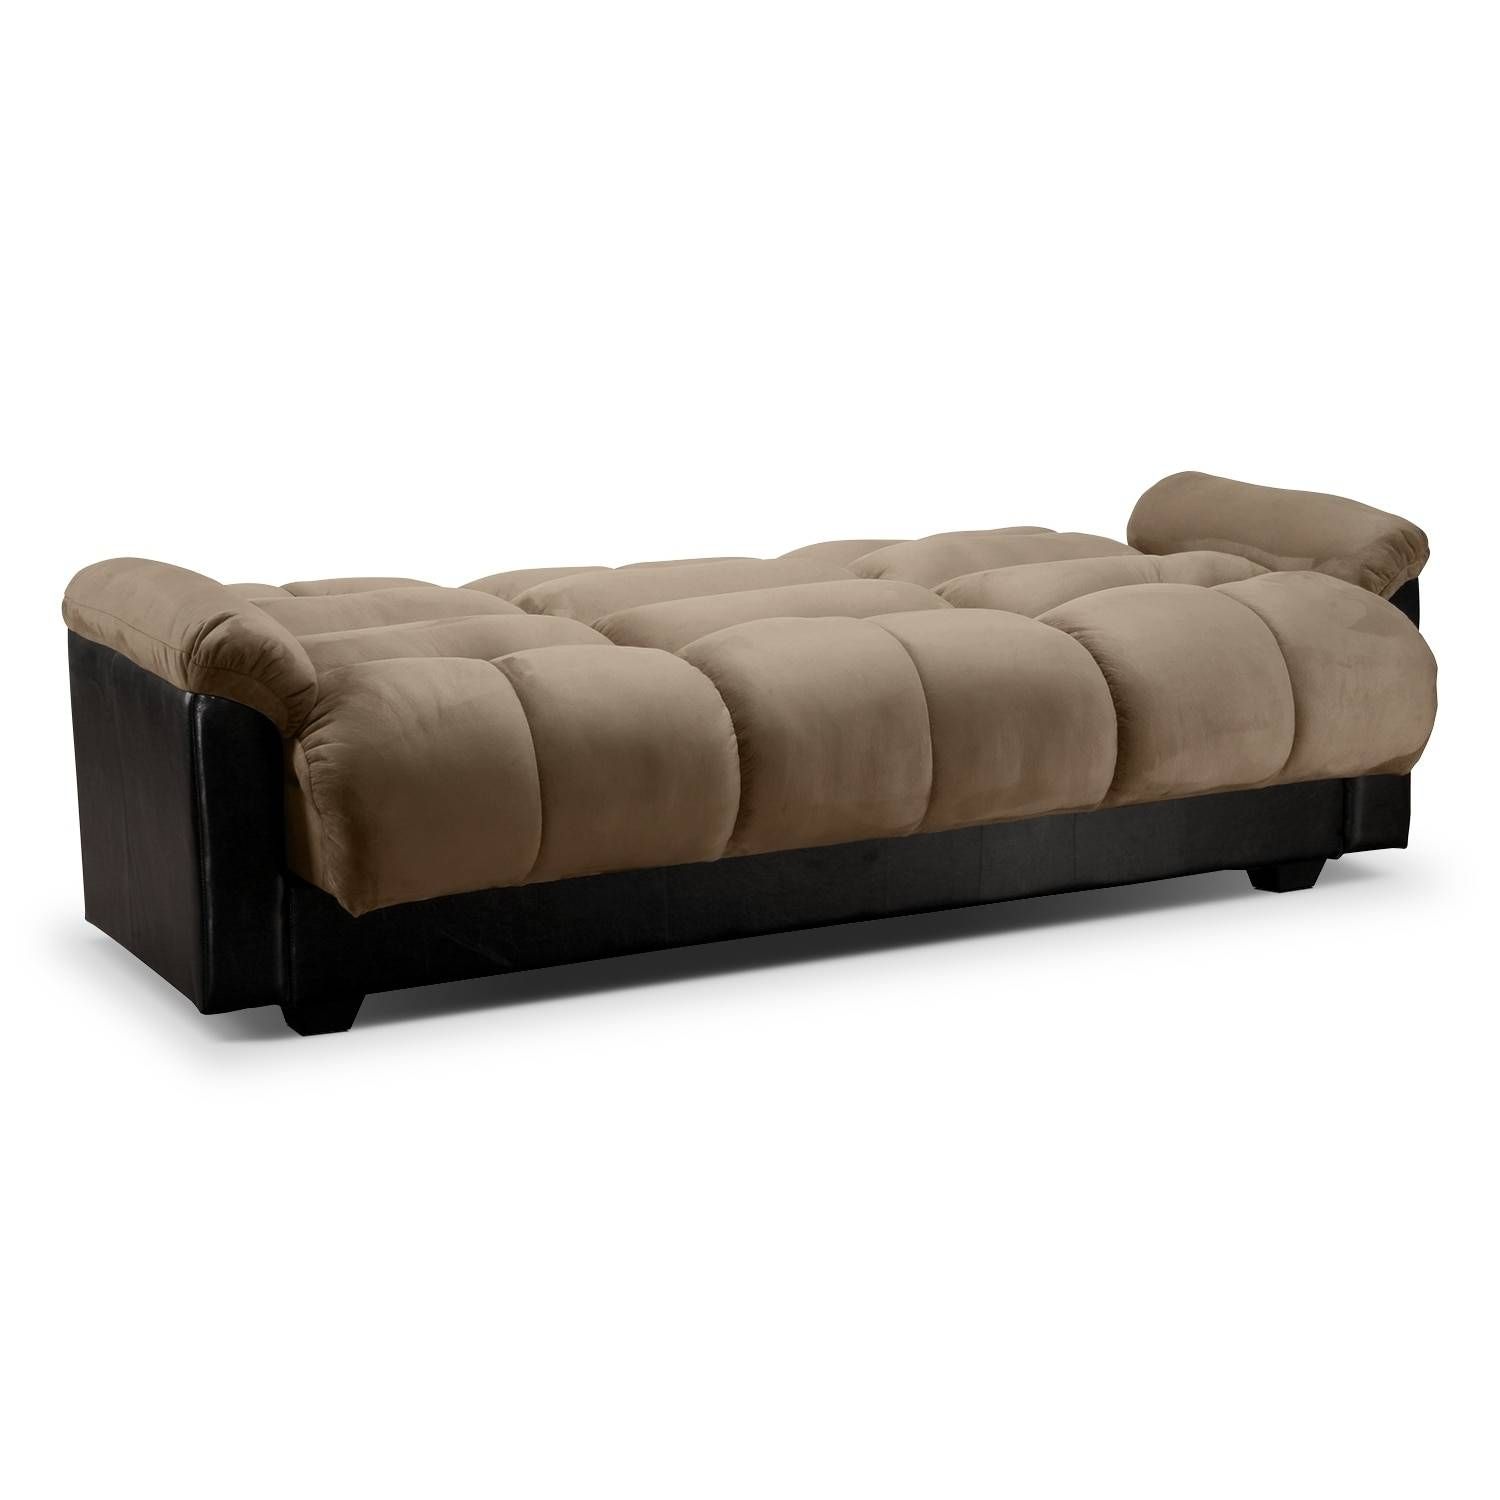 Ara Futon Sofa Bed With Storage – Hazelnut | Value City Furniture Inside Storage Sofa Beds (View 21 of 30)